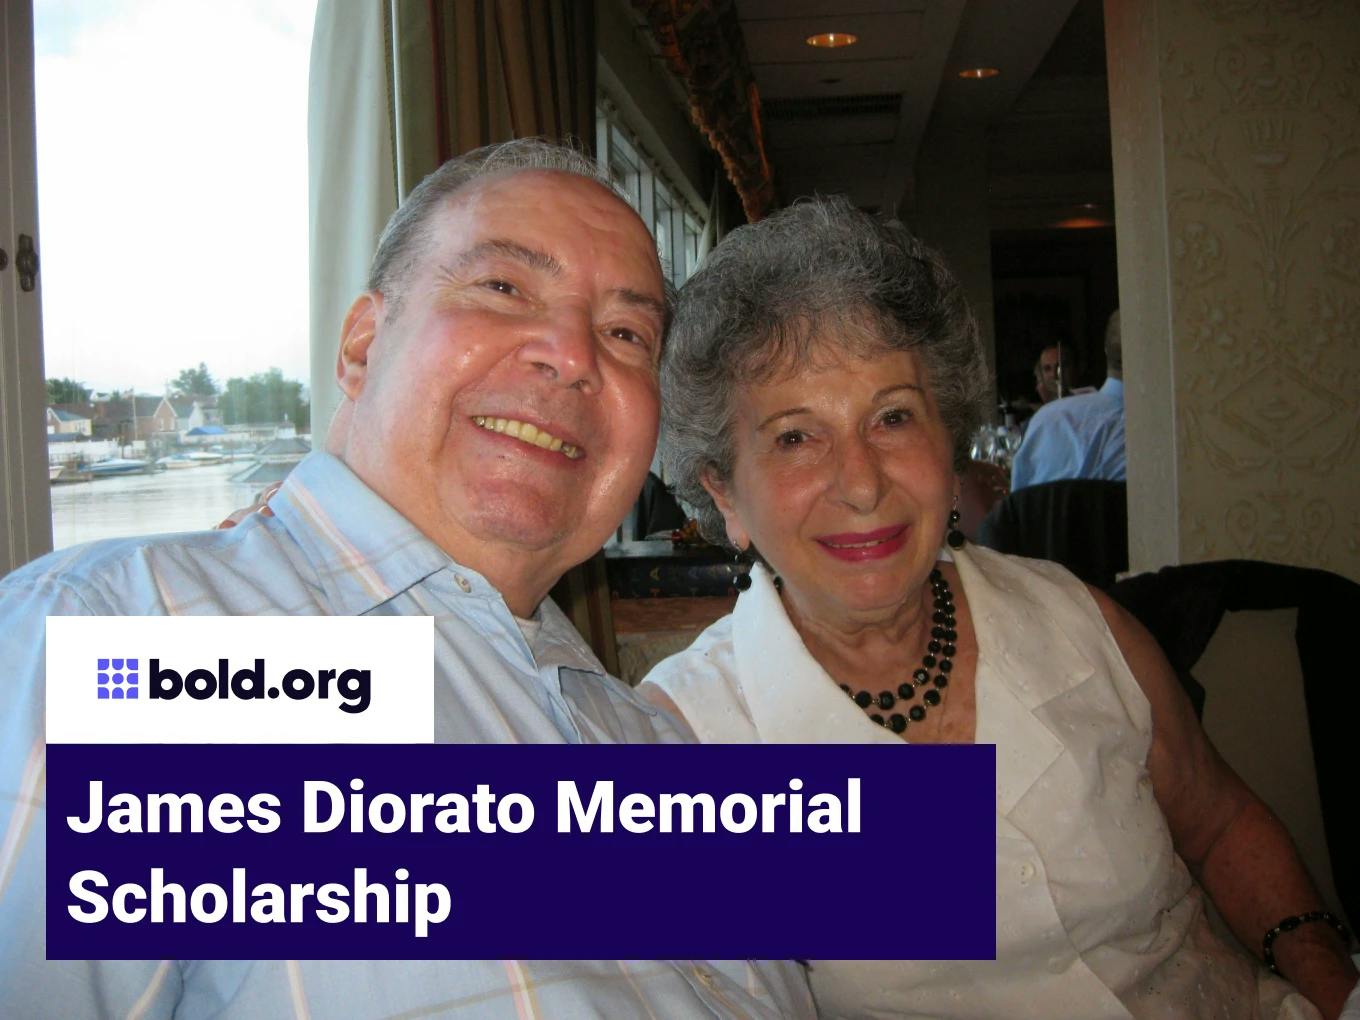 James Diorato Memorial Scholarship